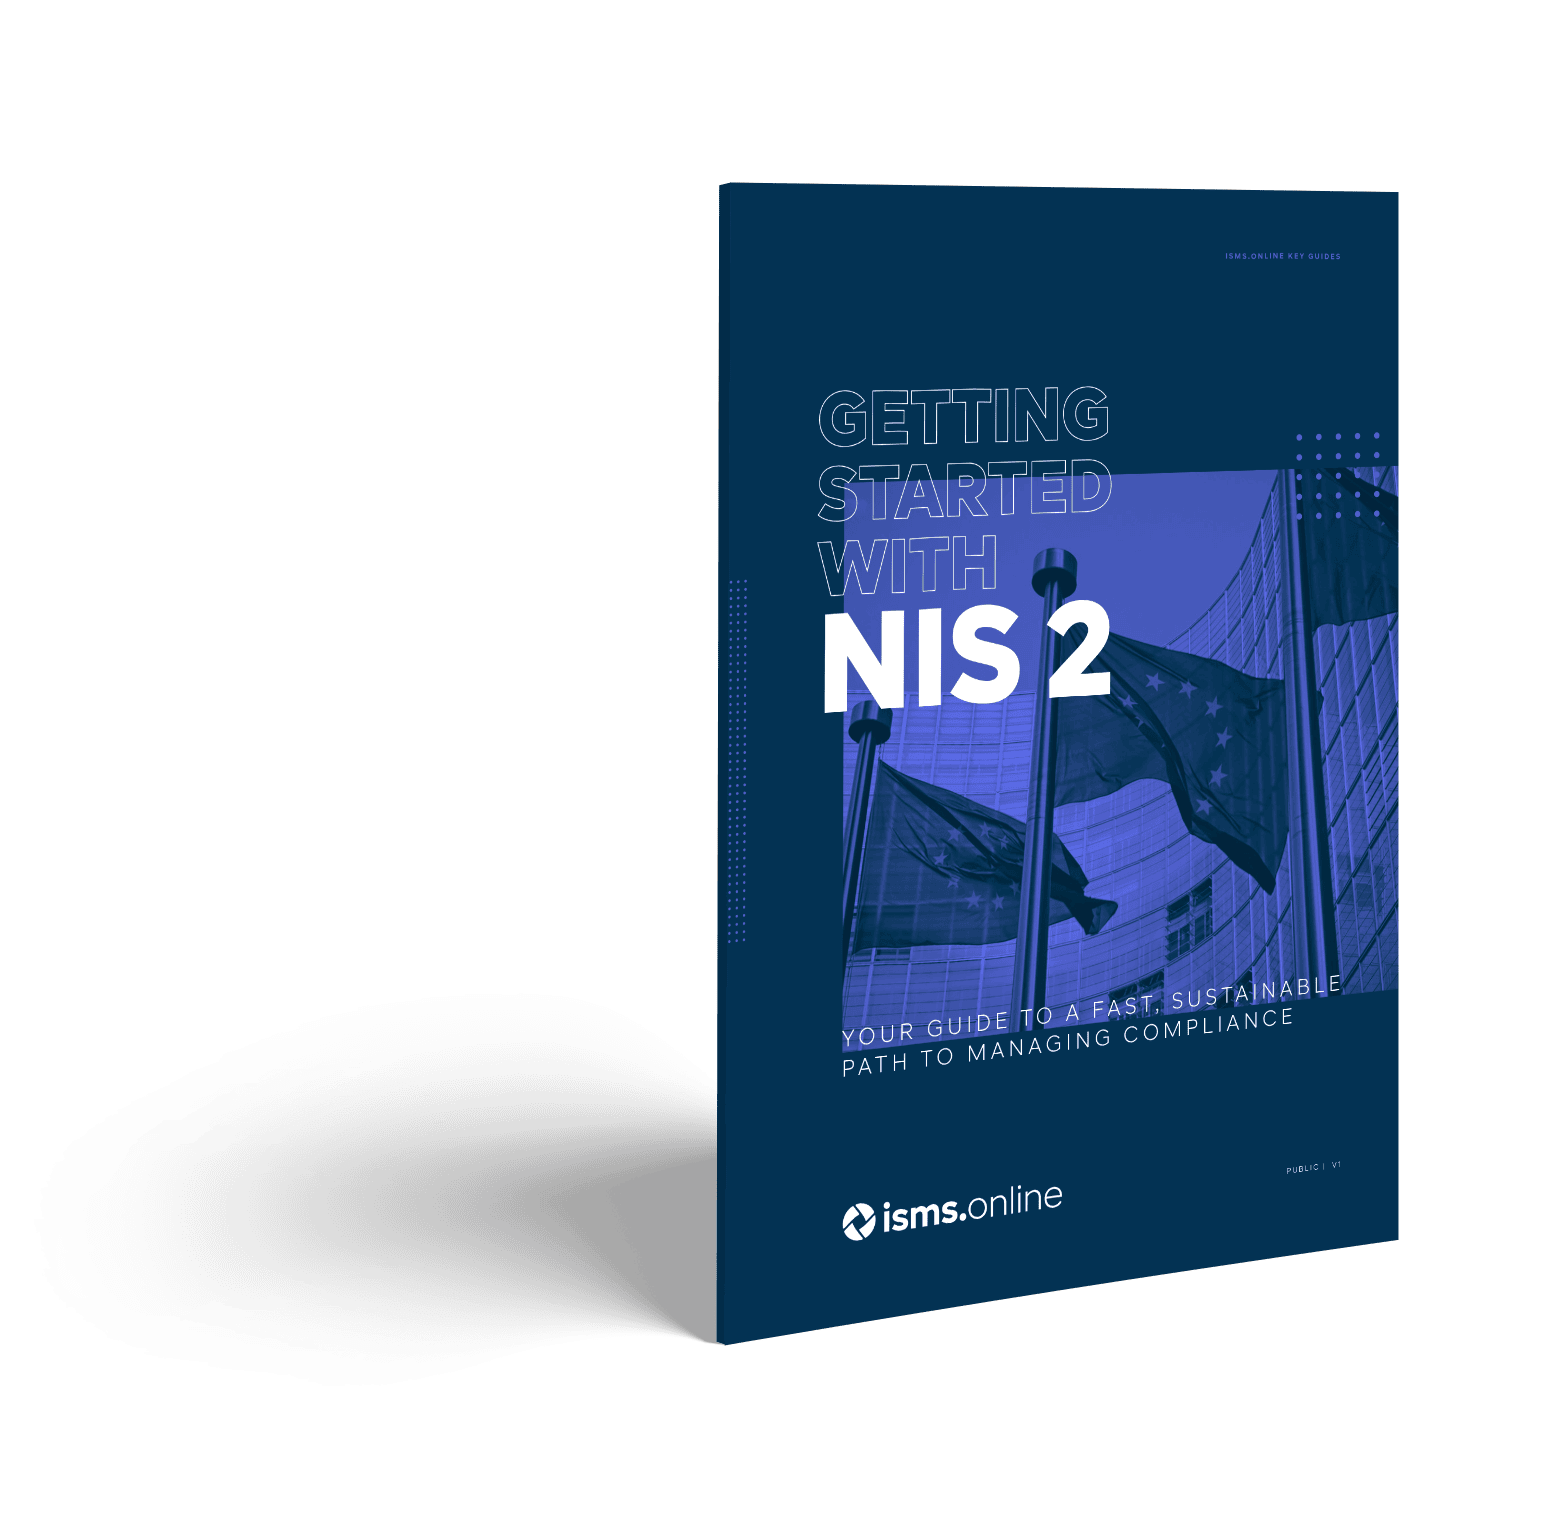 NIS 2 compliance